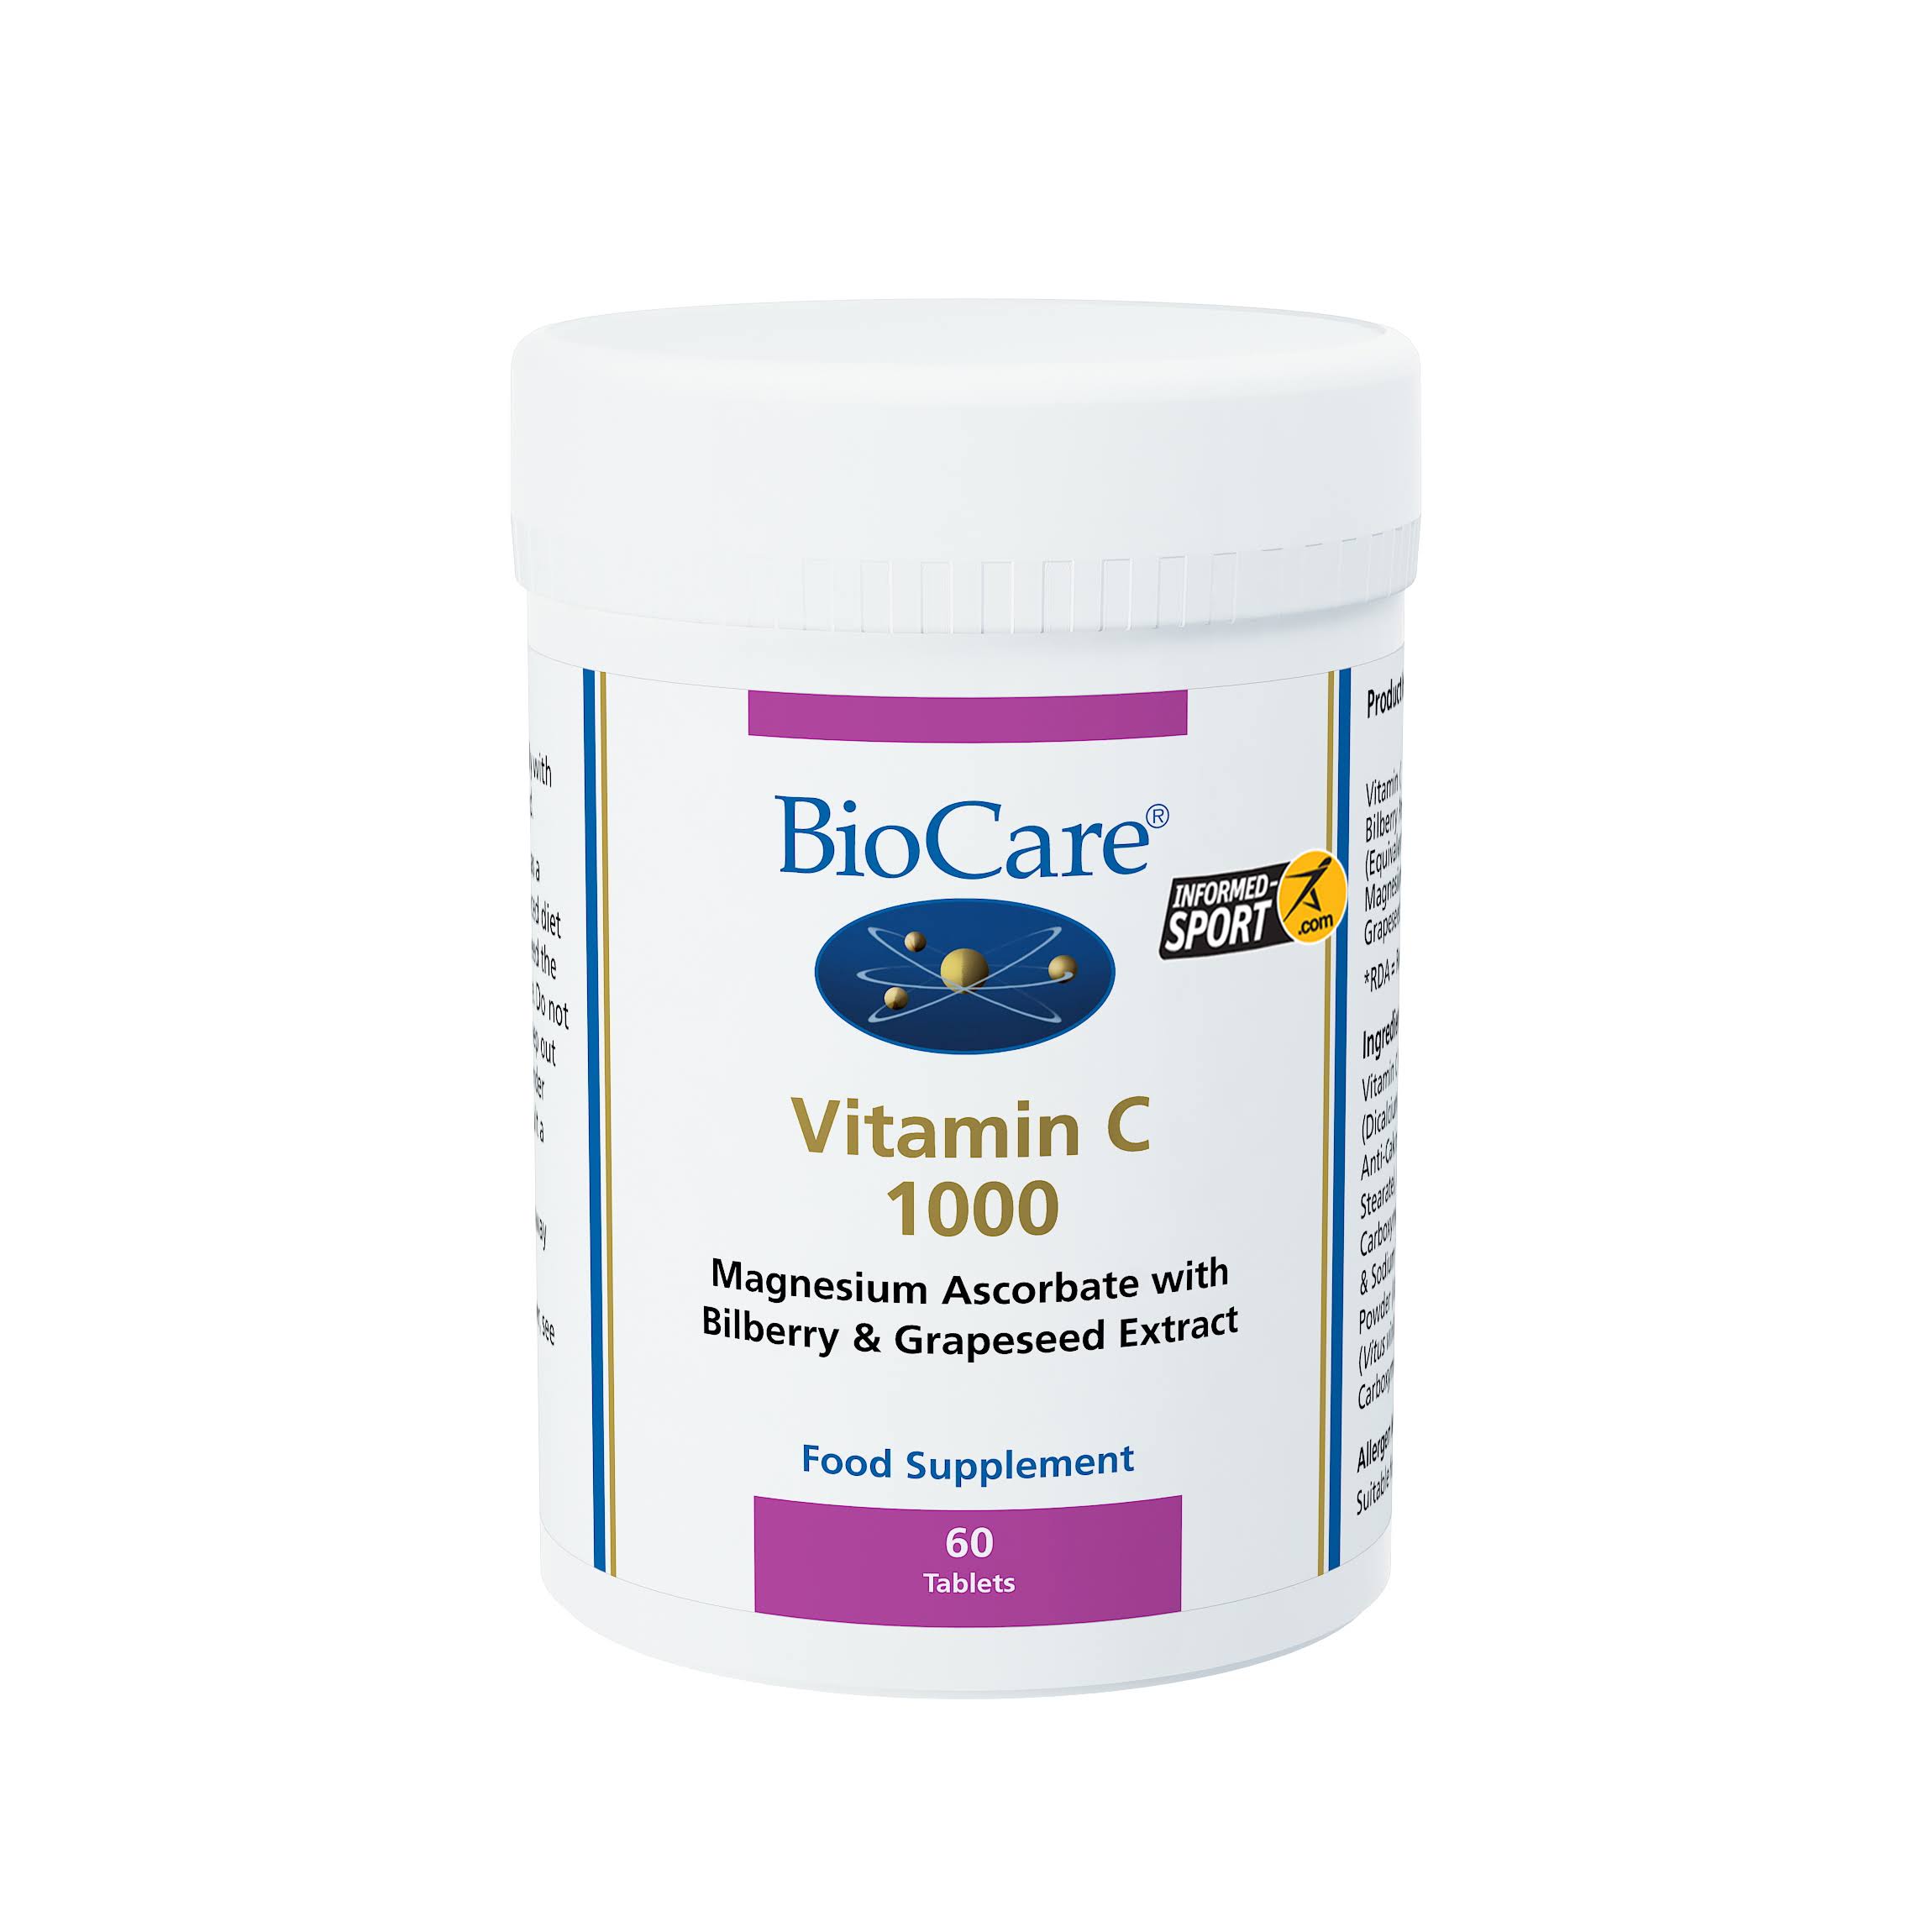 BioCare Vitamin C 1000 - 60 tablets